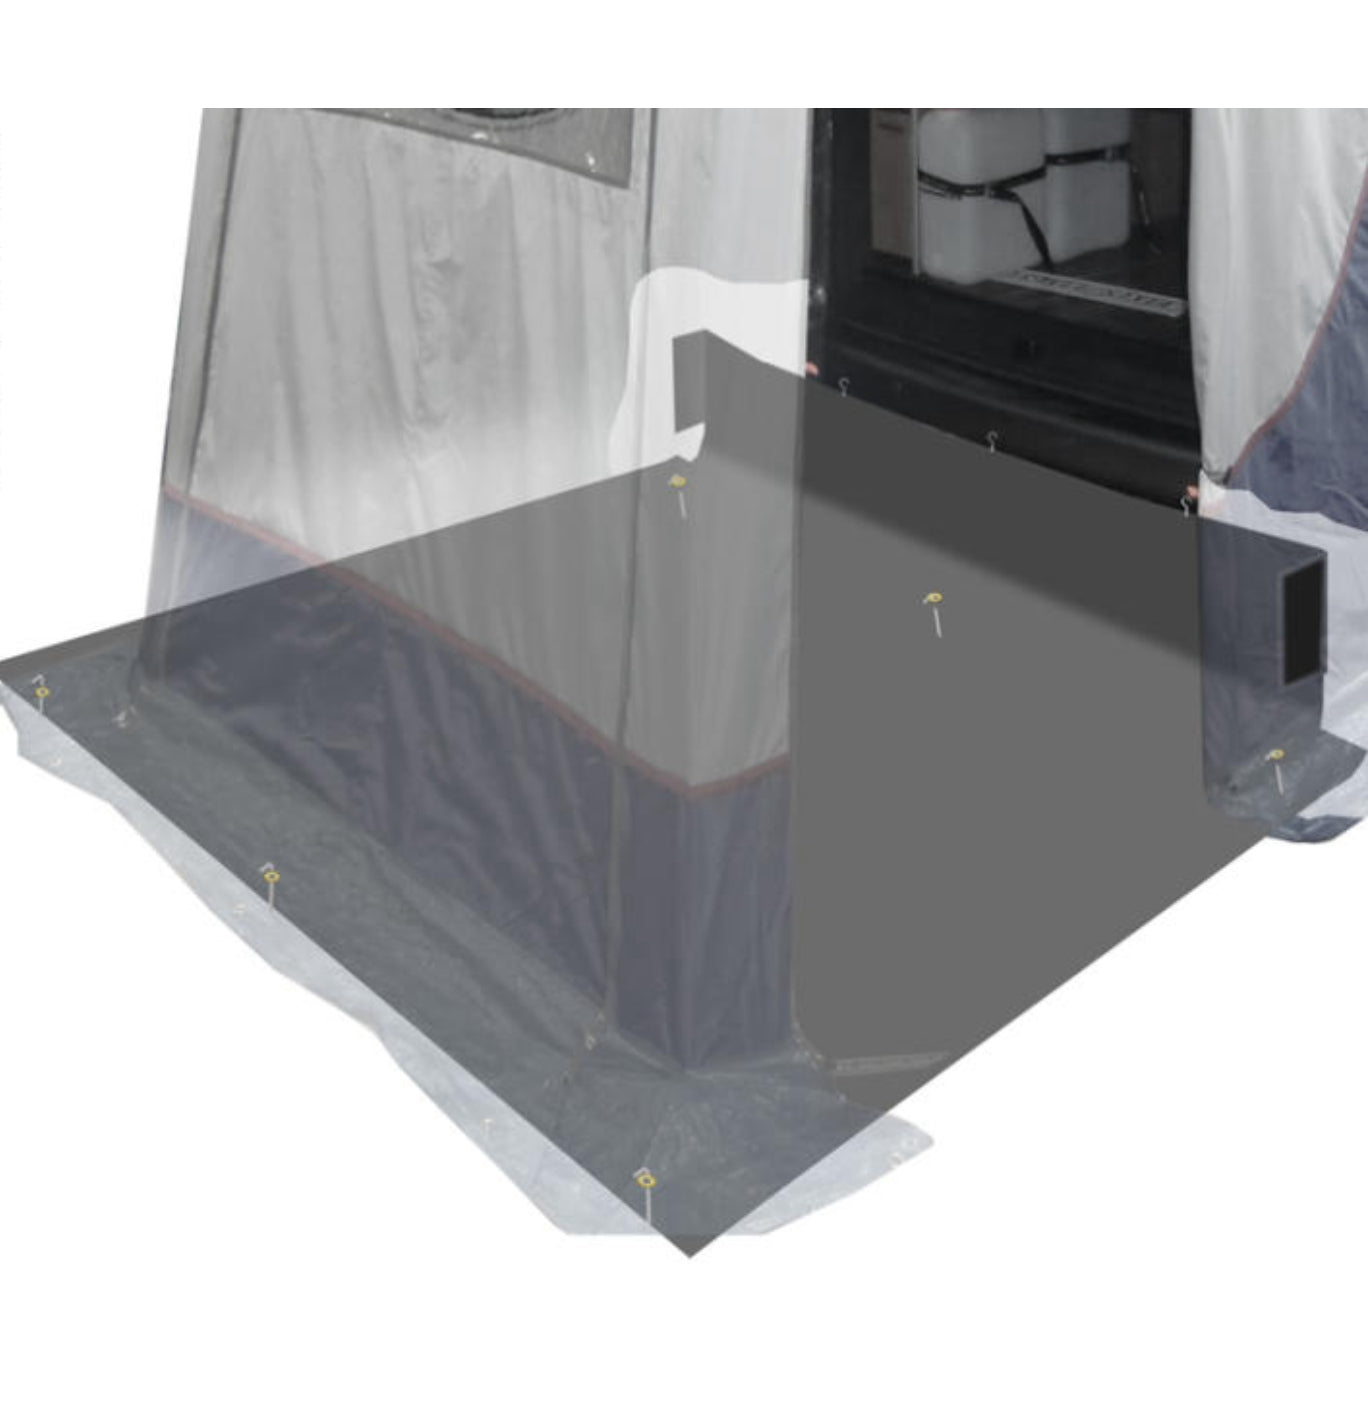 Reimo Upgrade 2 Cabin Tailgate Tent & Ground Sheet Bundle Image